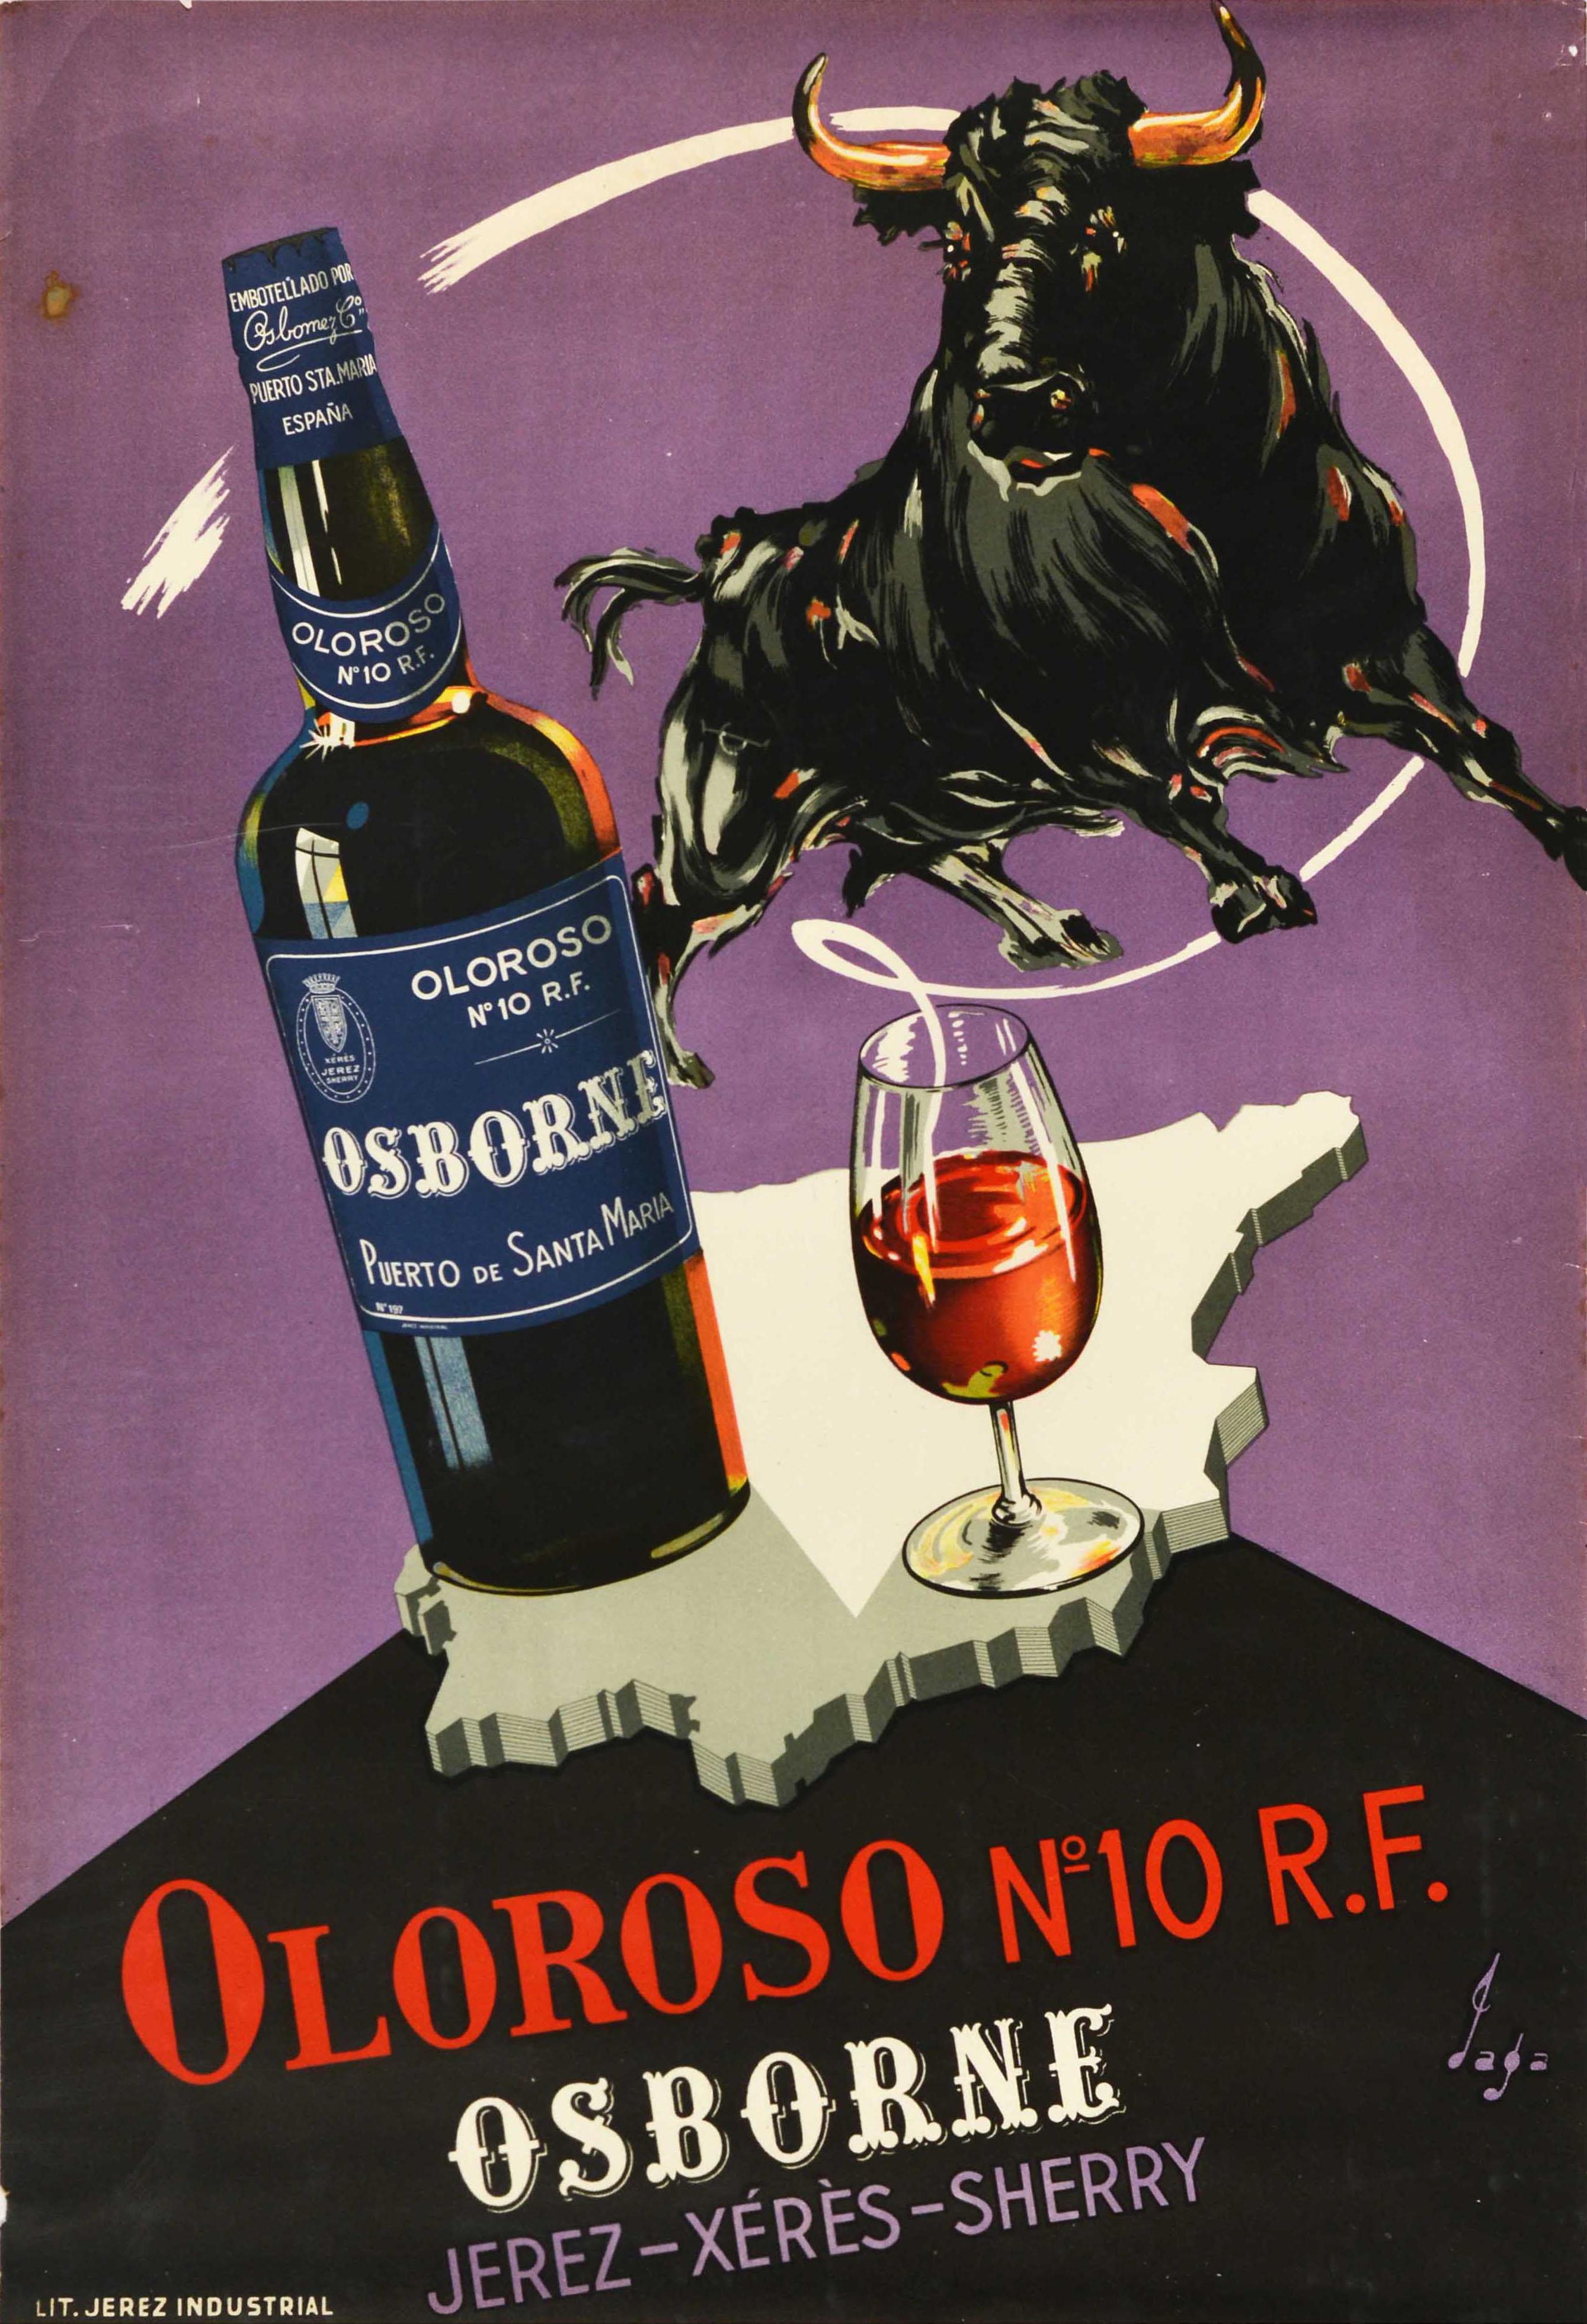 Jaga Print - Original Vintage Drink Poster Oloroso No.10 R.F. Osborne Sherry Map Bull Design